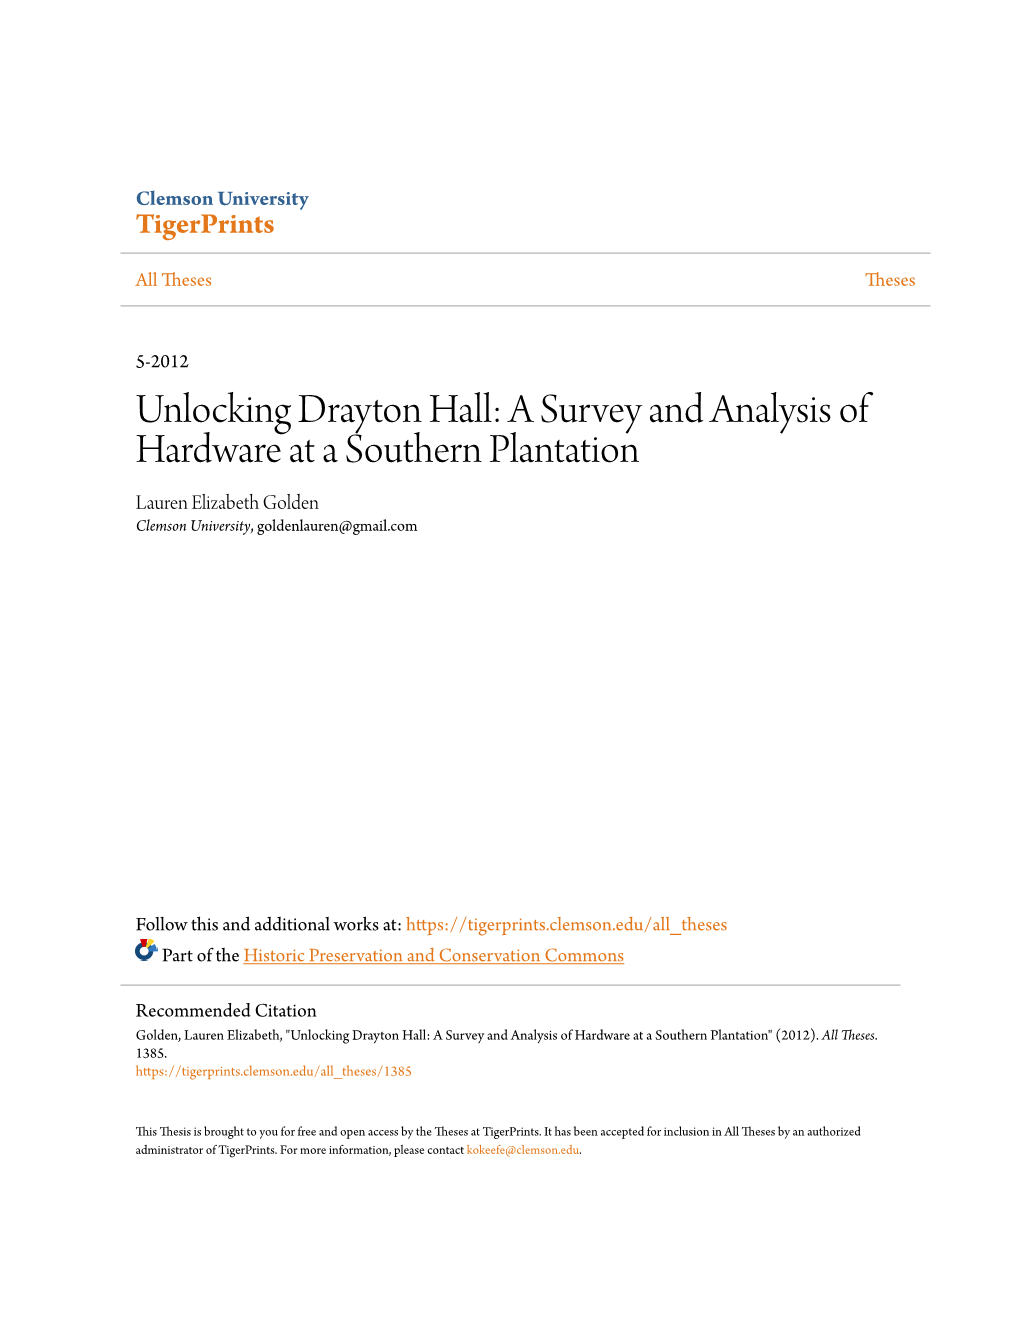 Unlocking Drayton Hall: a Survey and Analysis of Hardware at a Southern Plantation Lauren Elizabeth Golden Clemson University, Goldenlauren@Gmail.Com